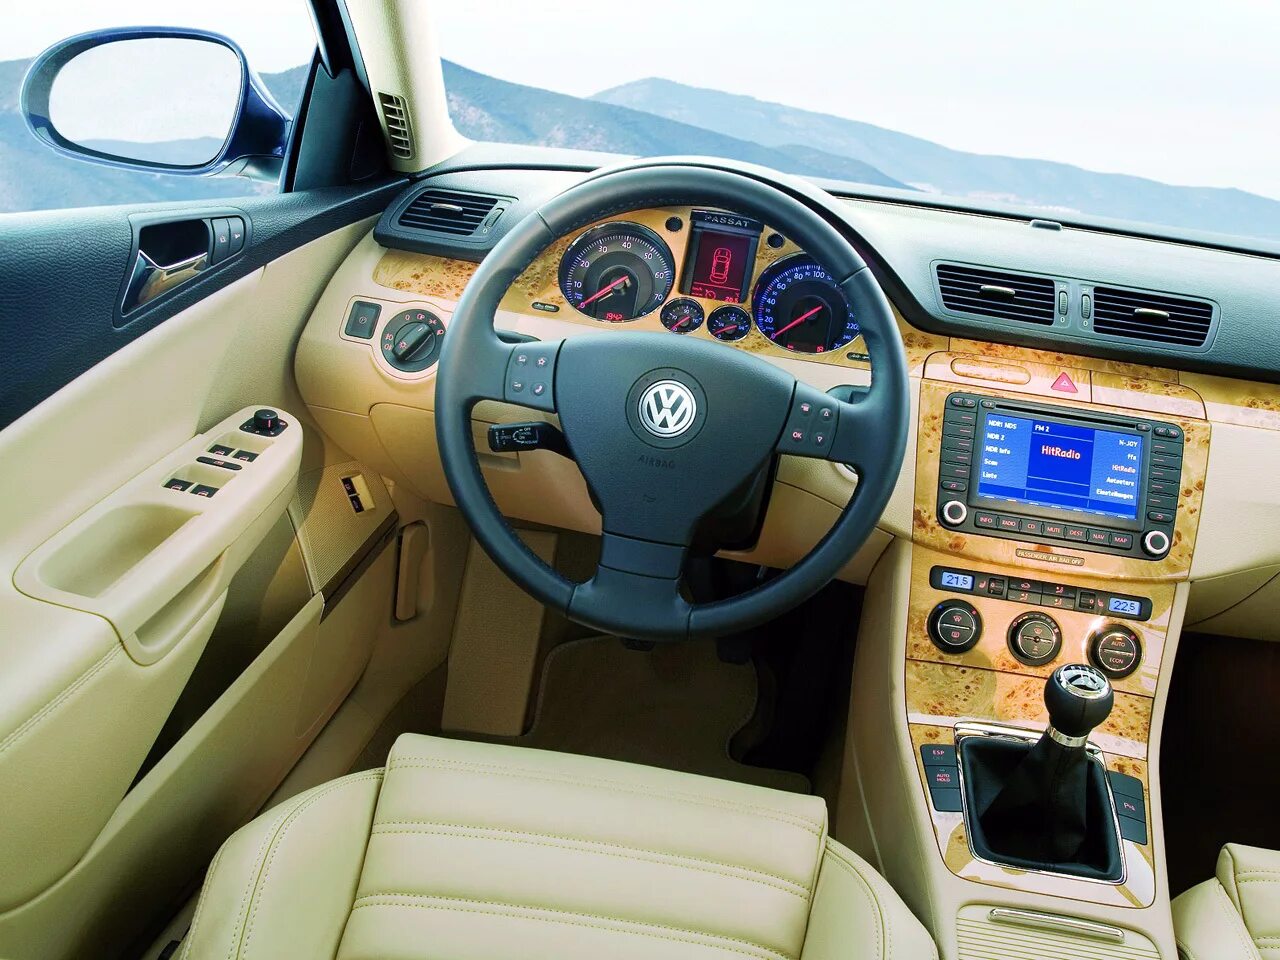 Пассат б6 2008 год. Фольксваген Пассат b6 салон. Volkswagen Passat 2006 салон. Volkswagen Passat b6 салон. Volkswagen Passat 2005 Interior.